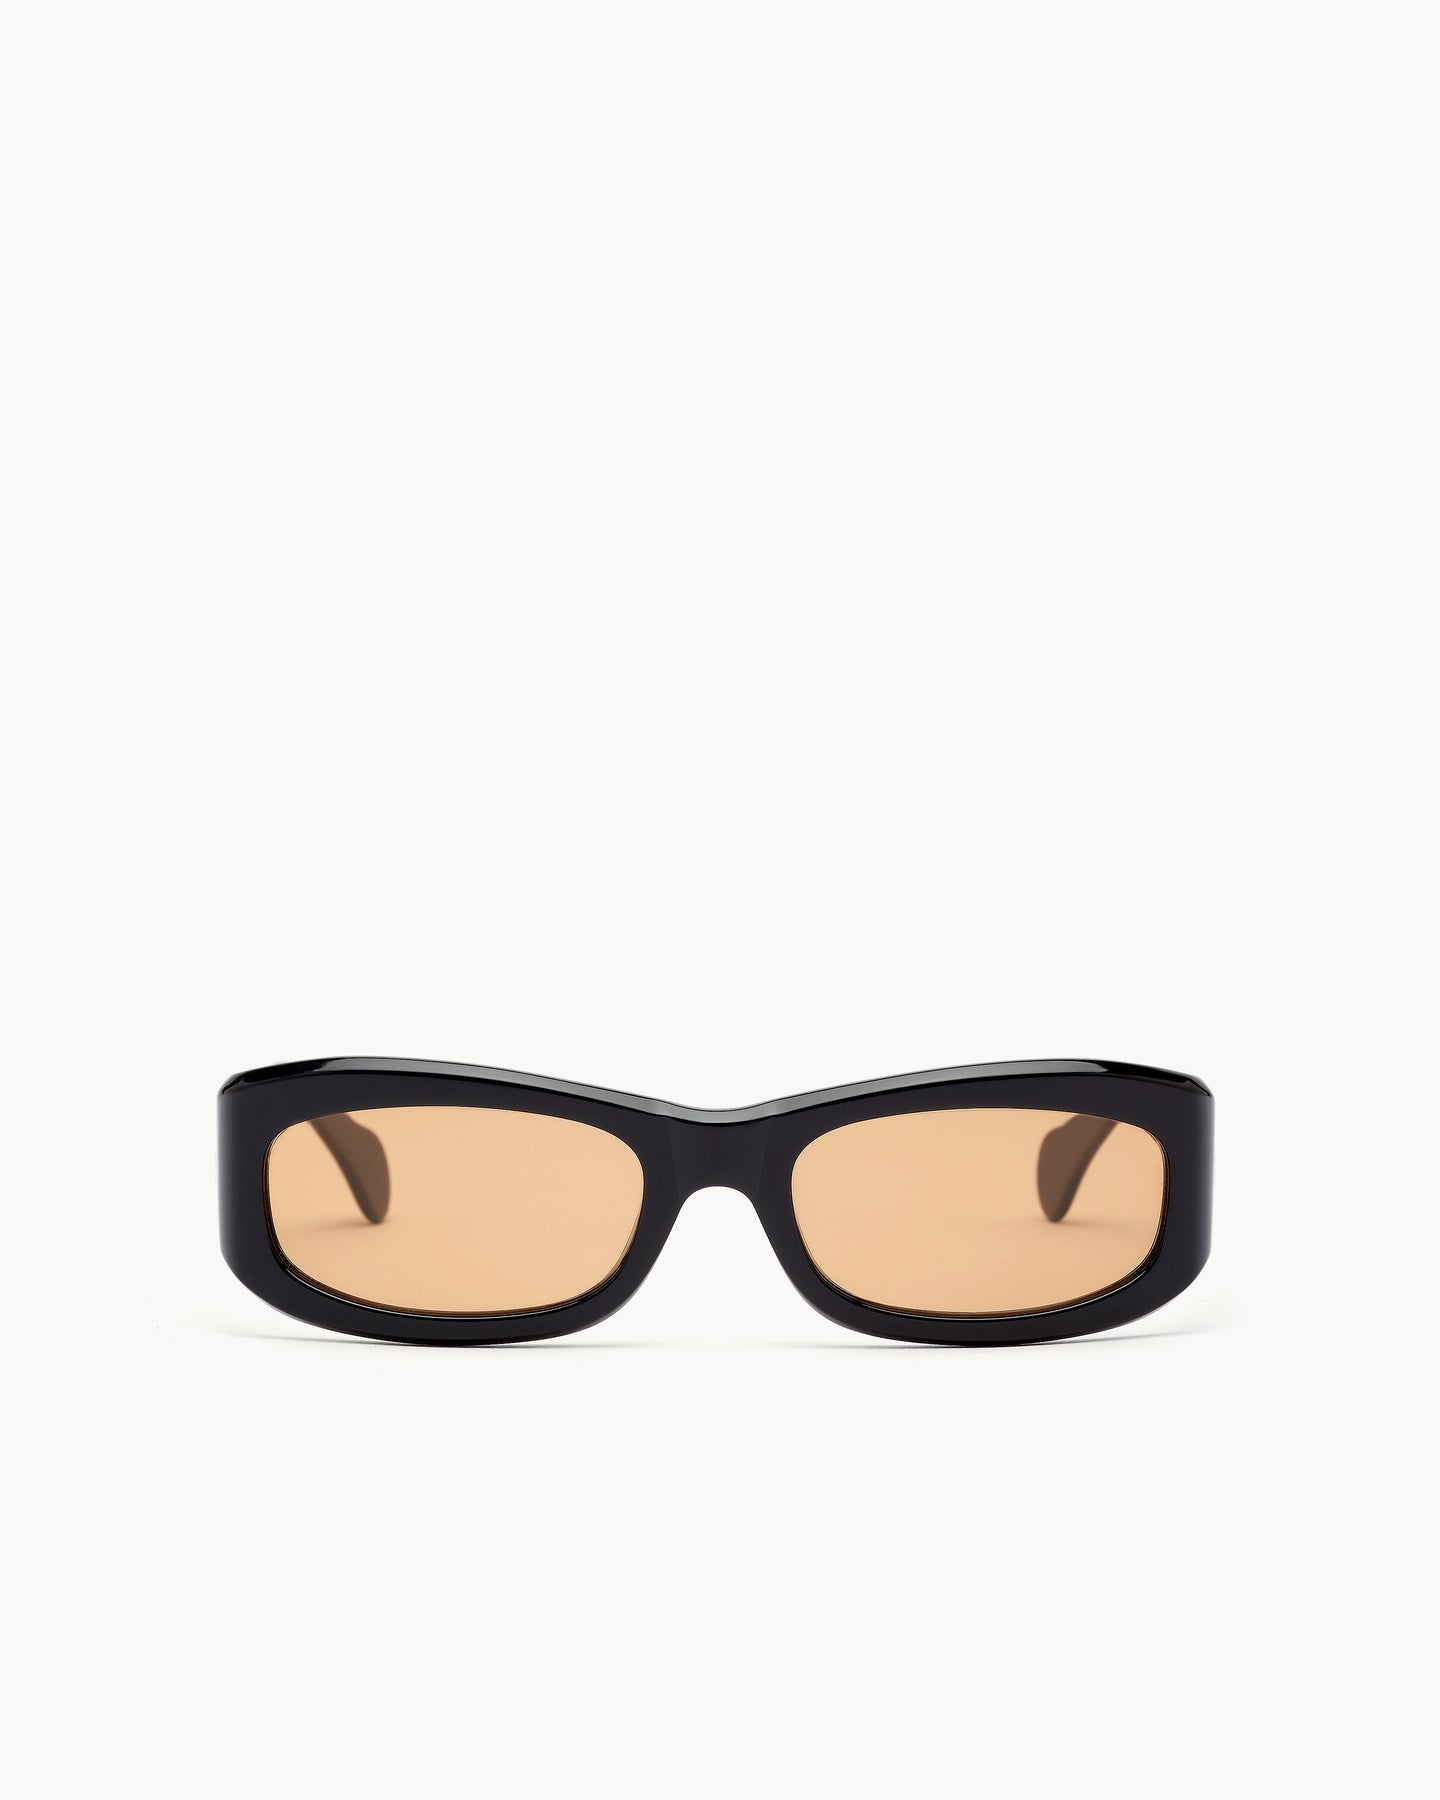 Port Tanger Saudade Sunglasses in Black Acetate and Cognac Lenses 1